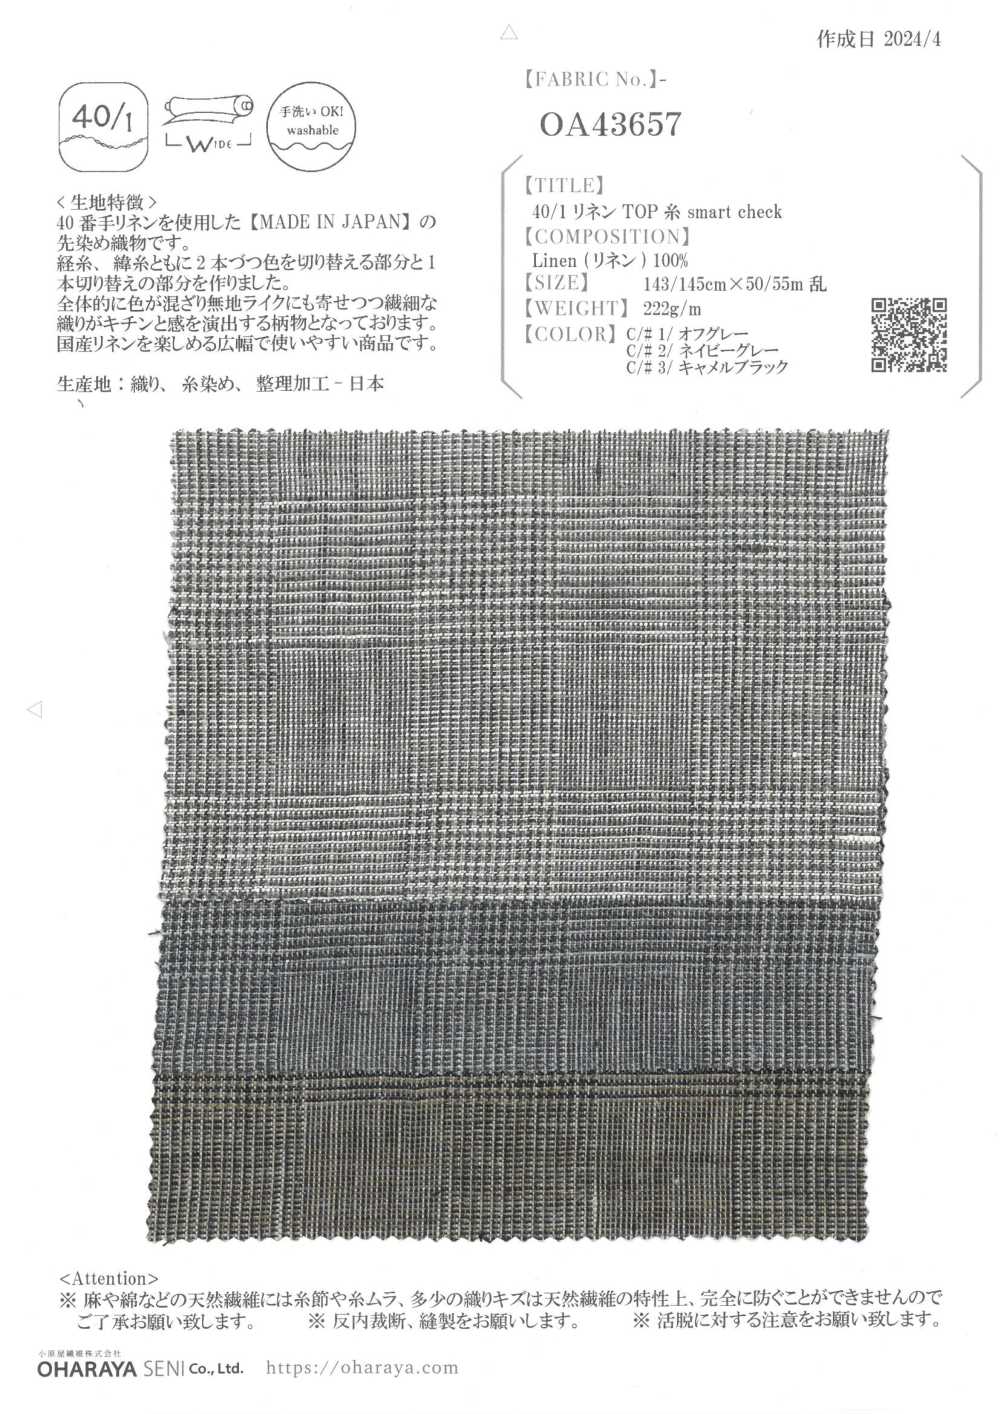 OA43657 40/1 Leinen TOP Faden Smart Check[Textilgewebe] Oharayaseni